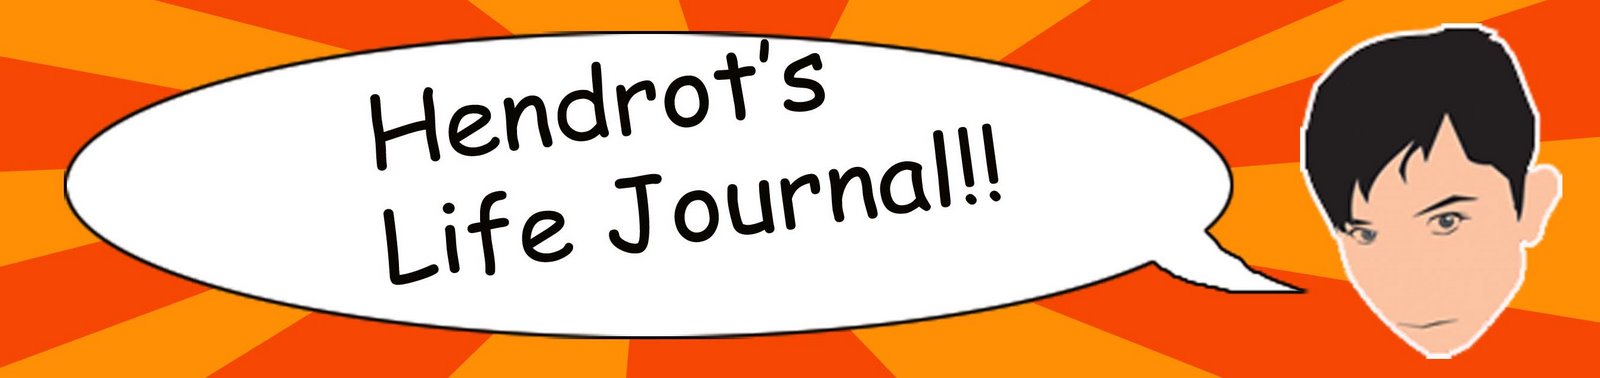 Hendrot's Life Journal